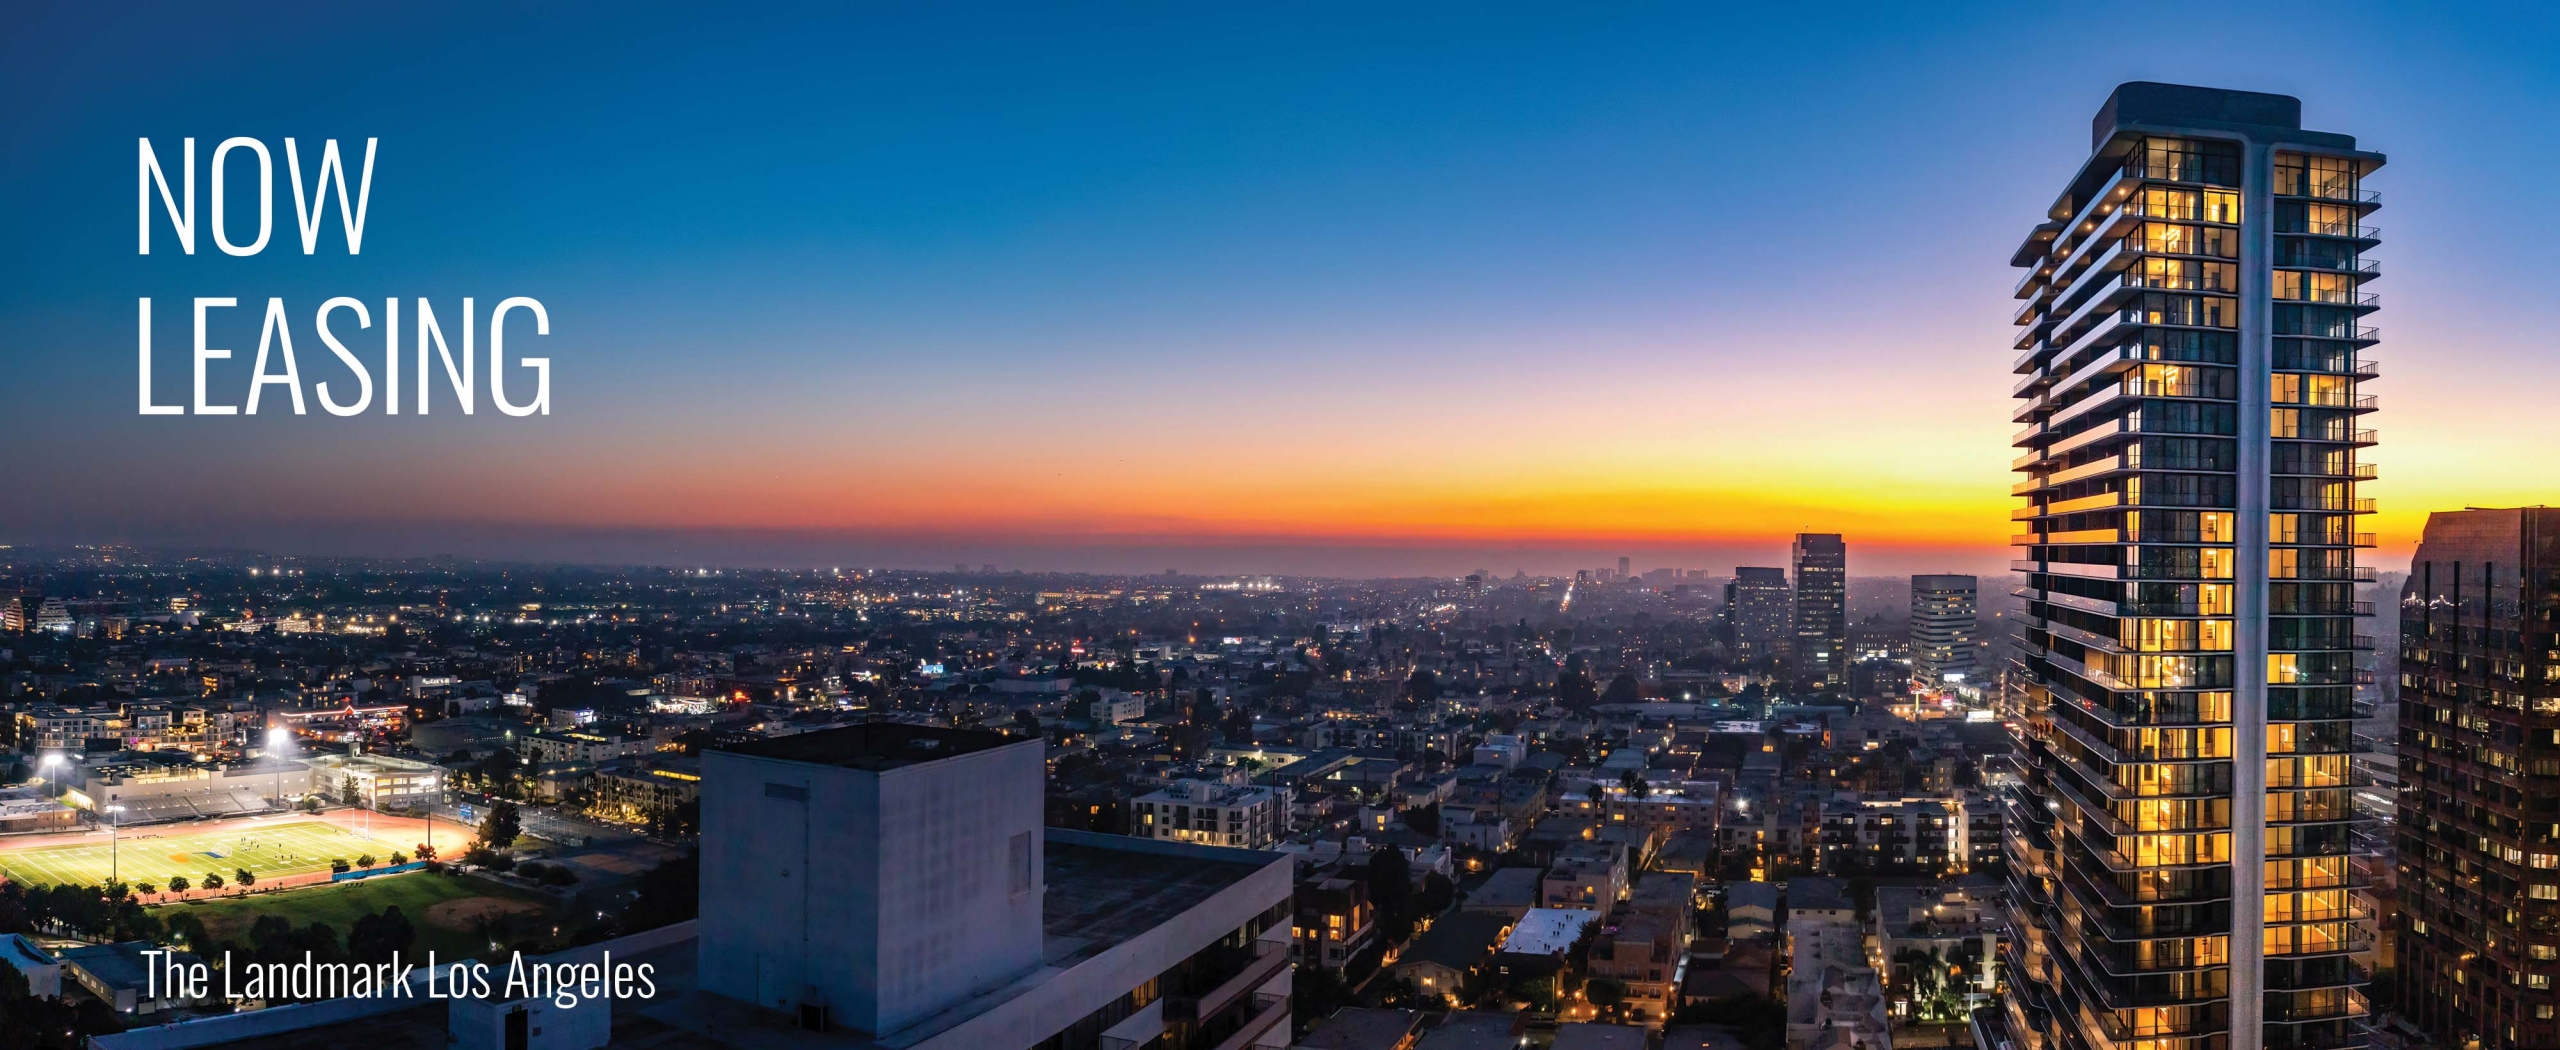 The Landmark Los Angeles at Sunset